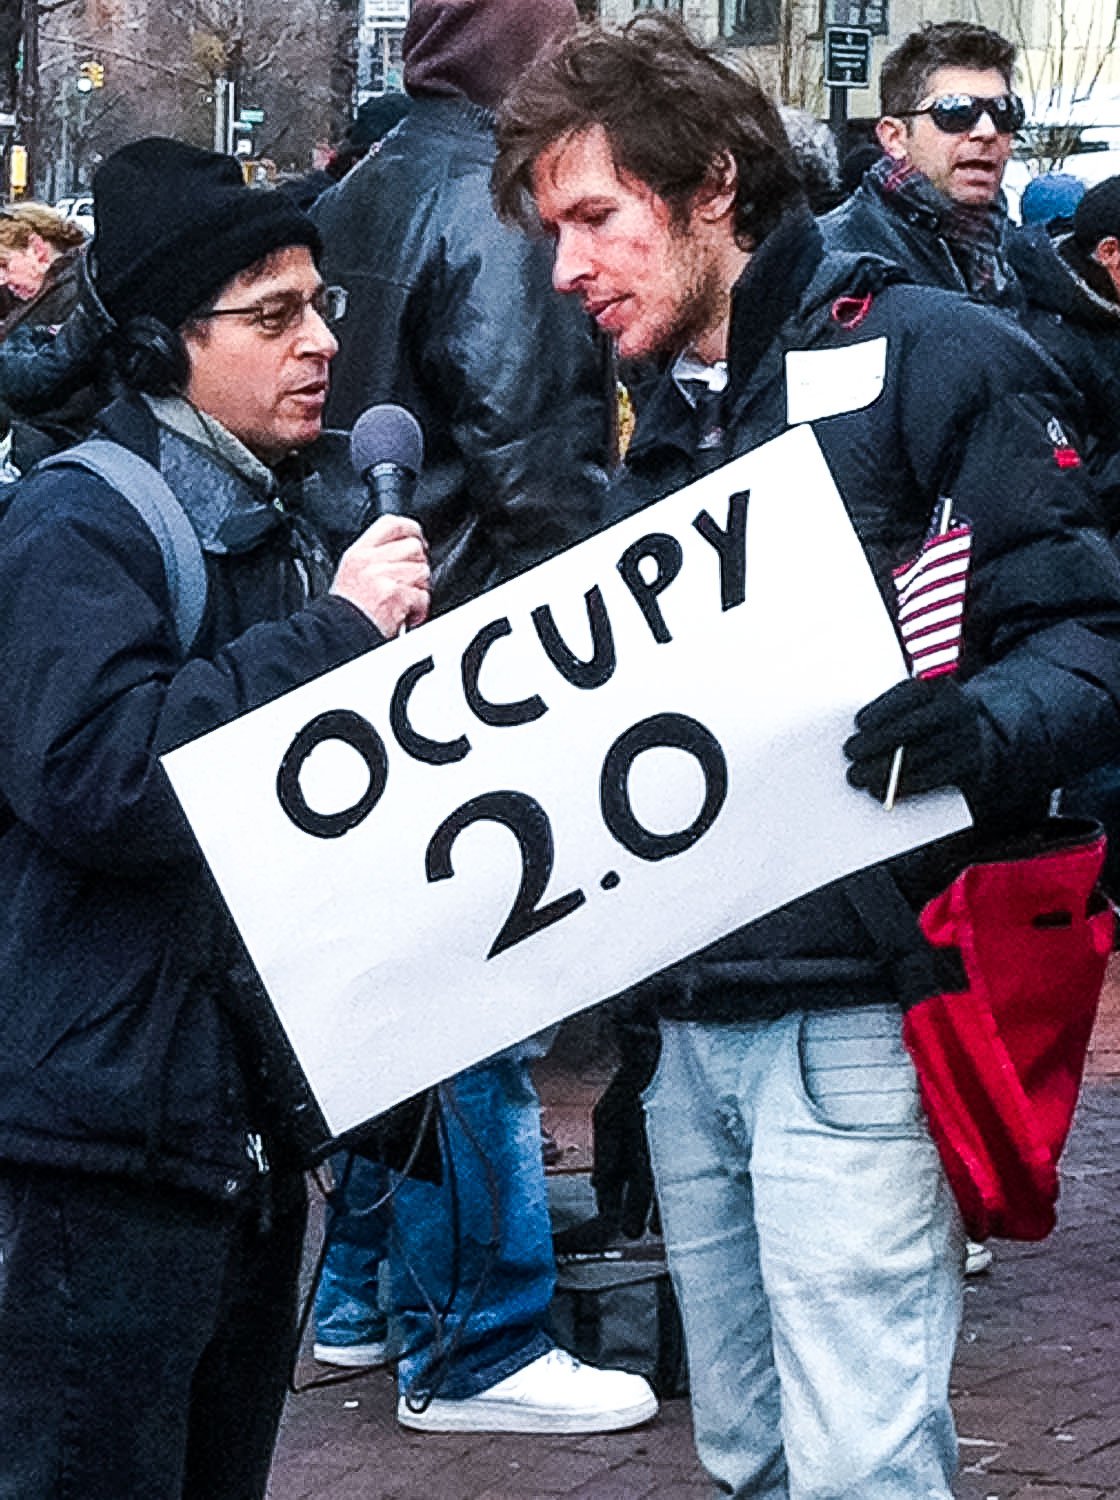 Occupy-WallStreet-2.0-2-Edit.jpg